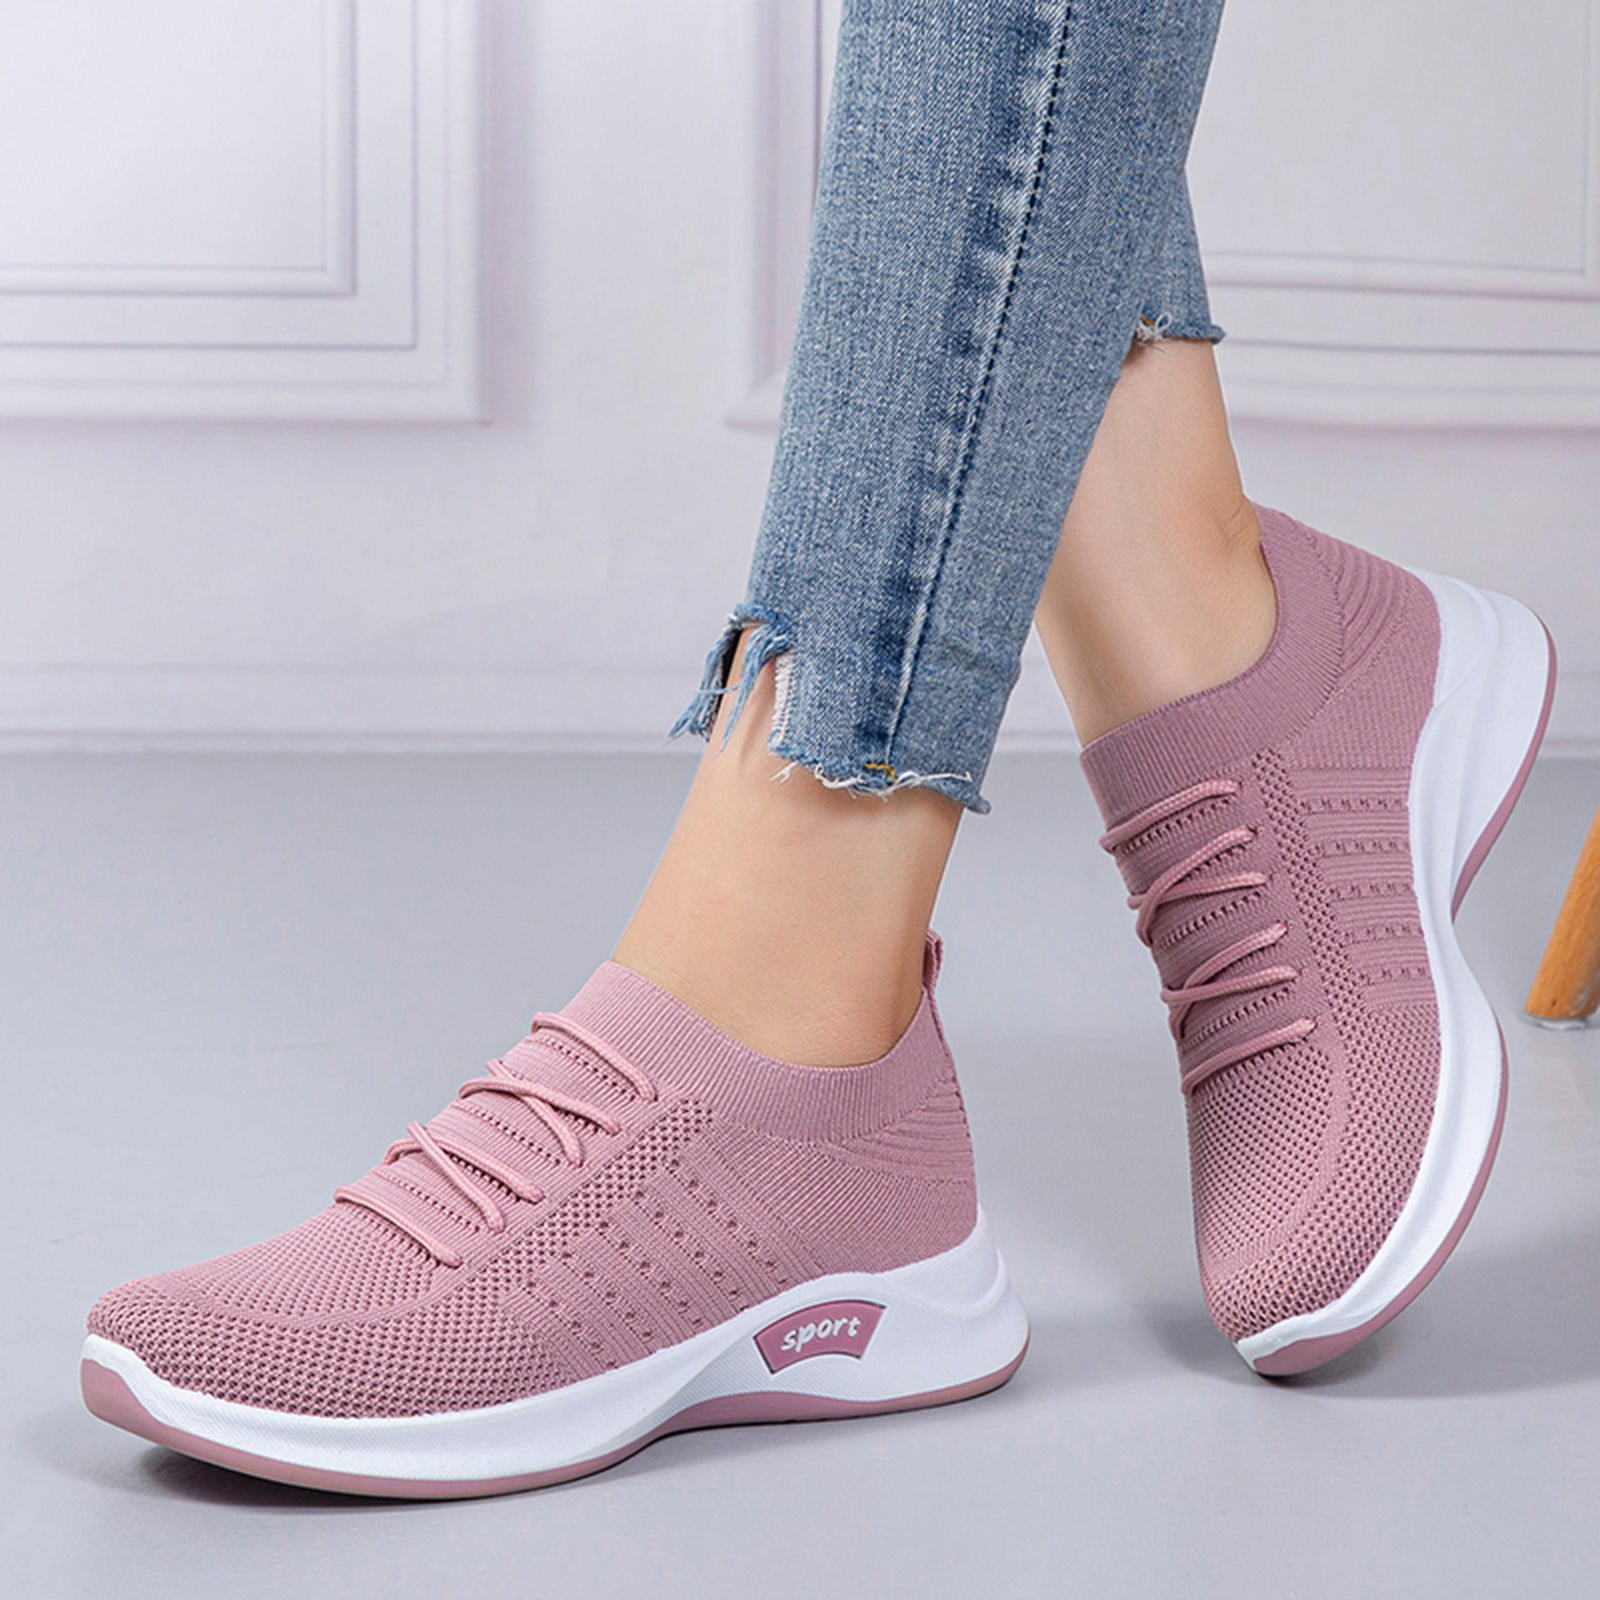 Buy Campus Footwear online - Women - 601 products | FASHIOLA.in